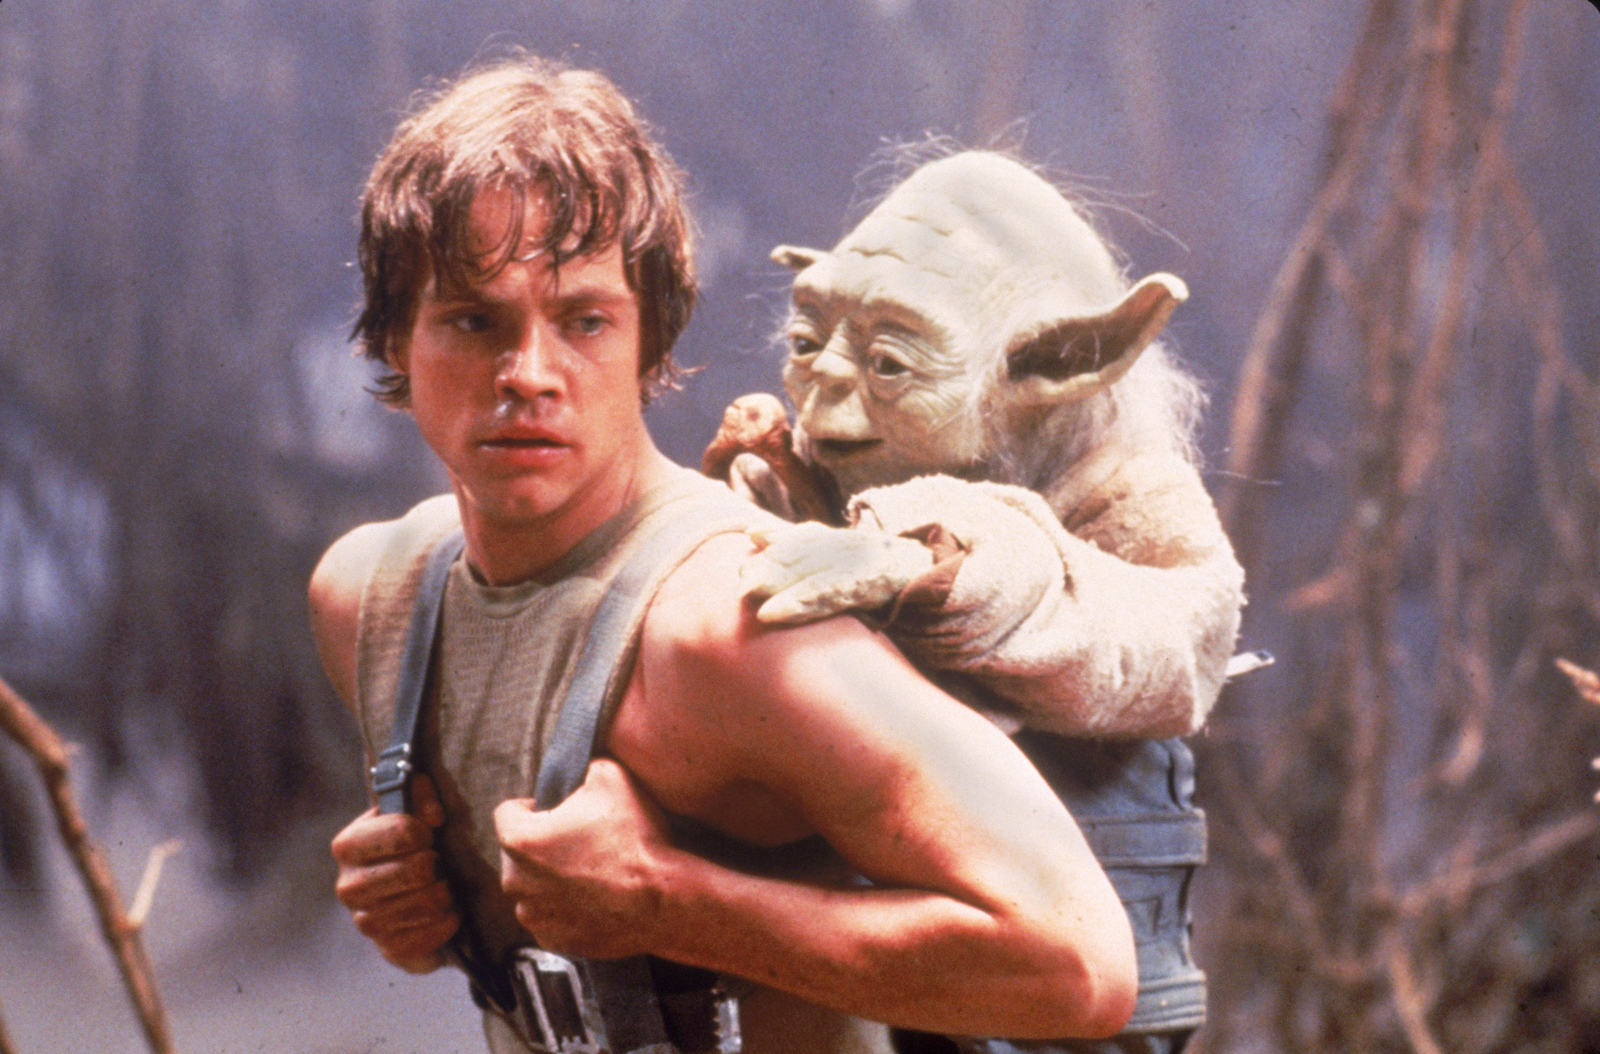 1620114679-Luke-Skywalker-(Mark-Hamill)--dan-Kershner-(Yoda-Irvin).jpg